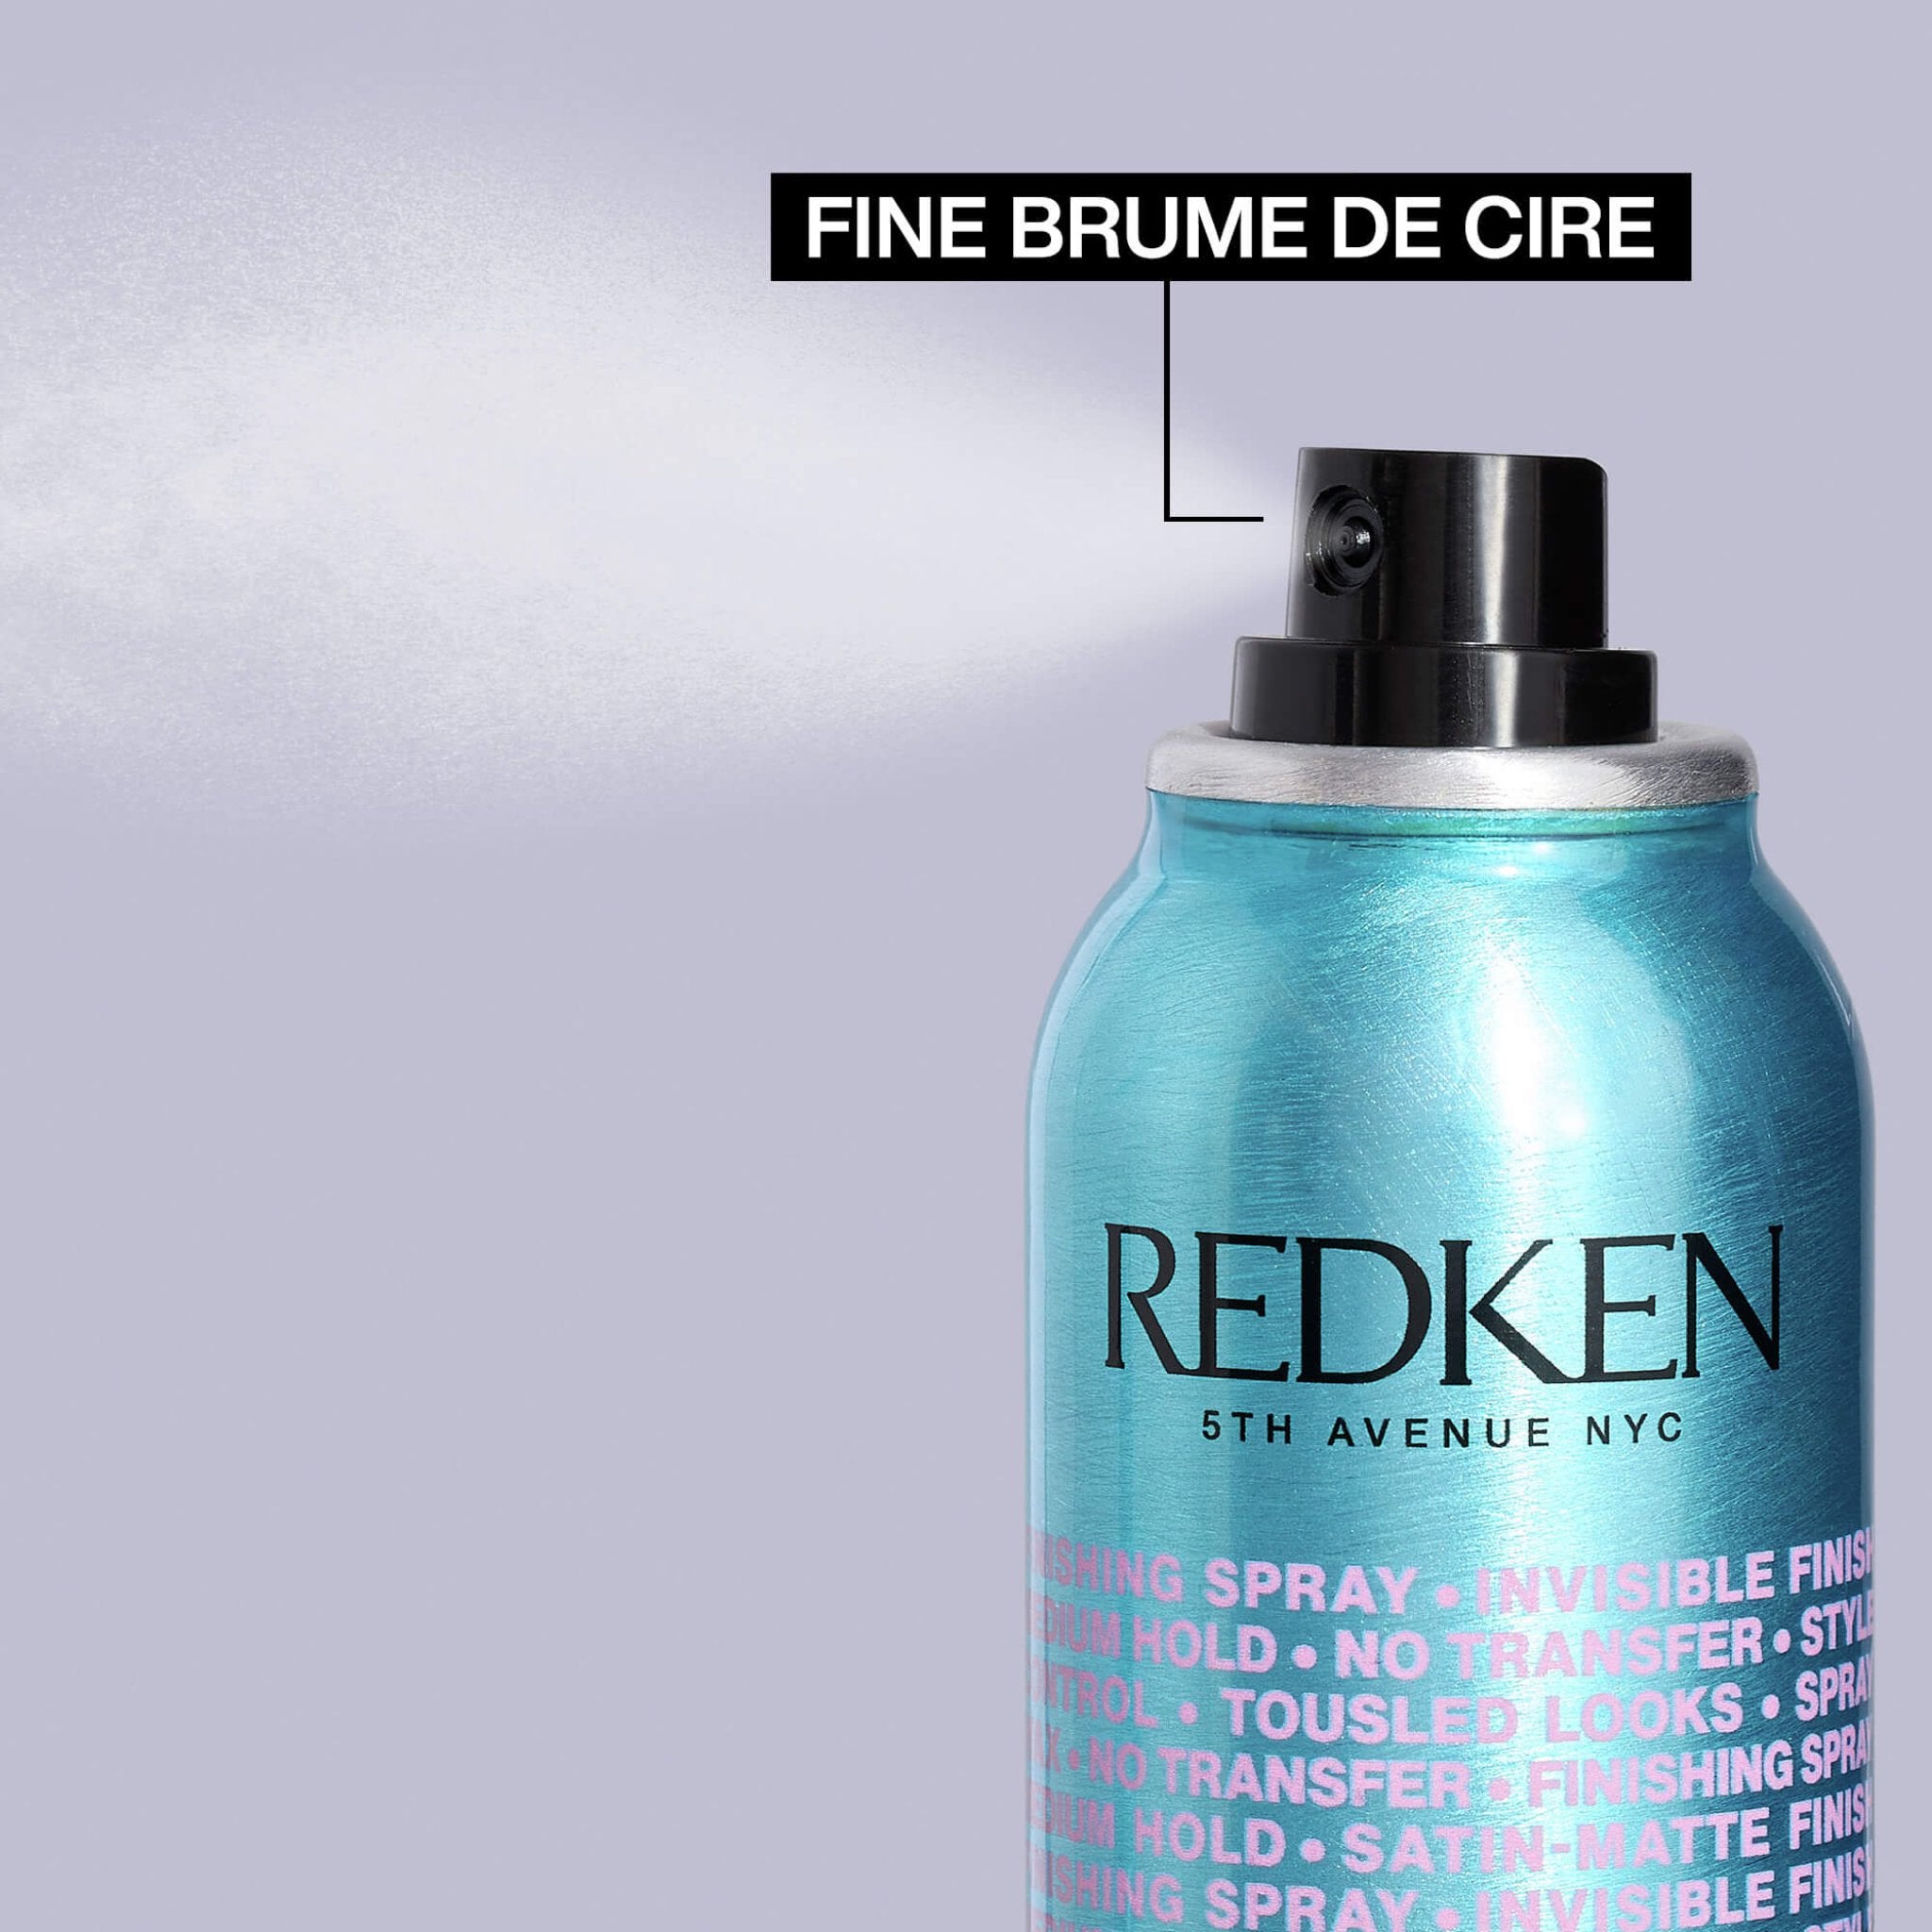 Redken. Cire de Finition Spray Wax - 165 gr - Concept C. Shop